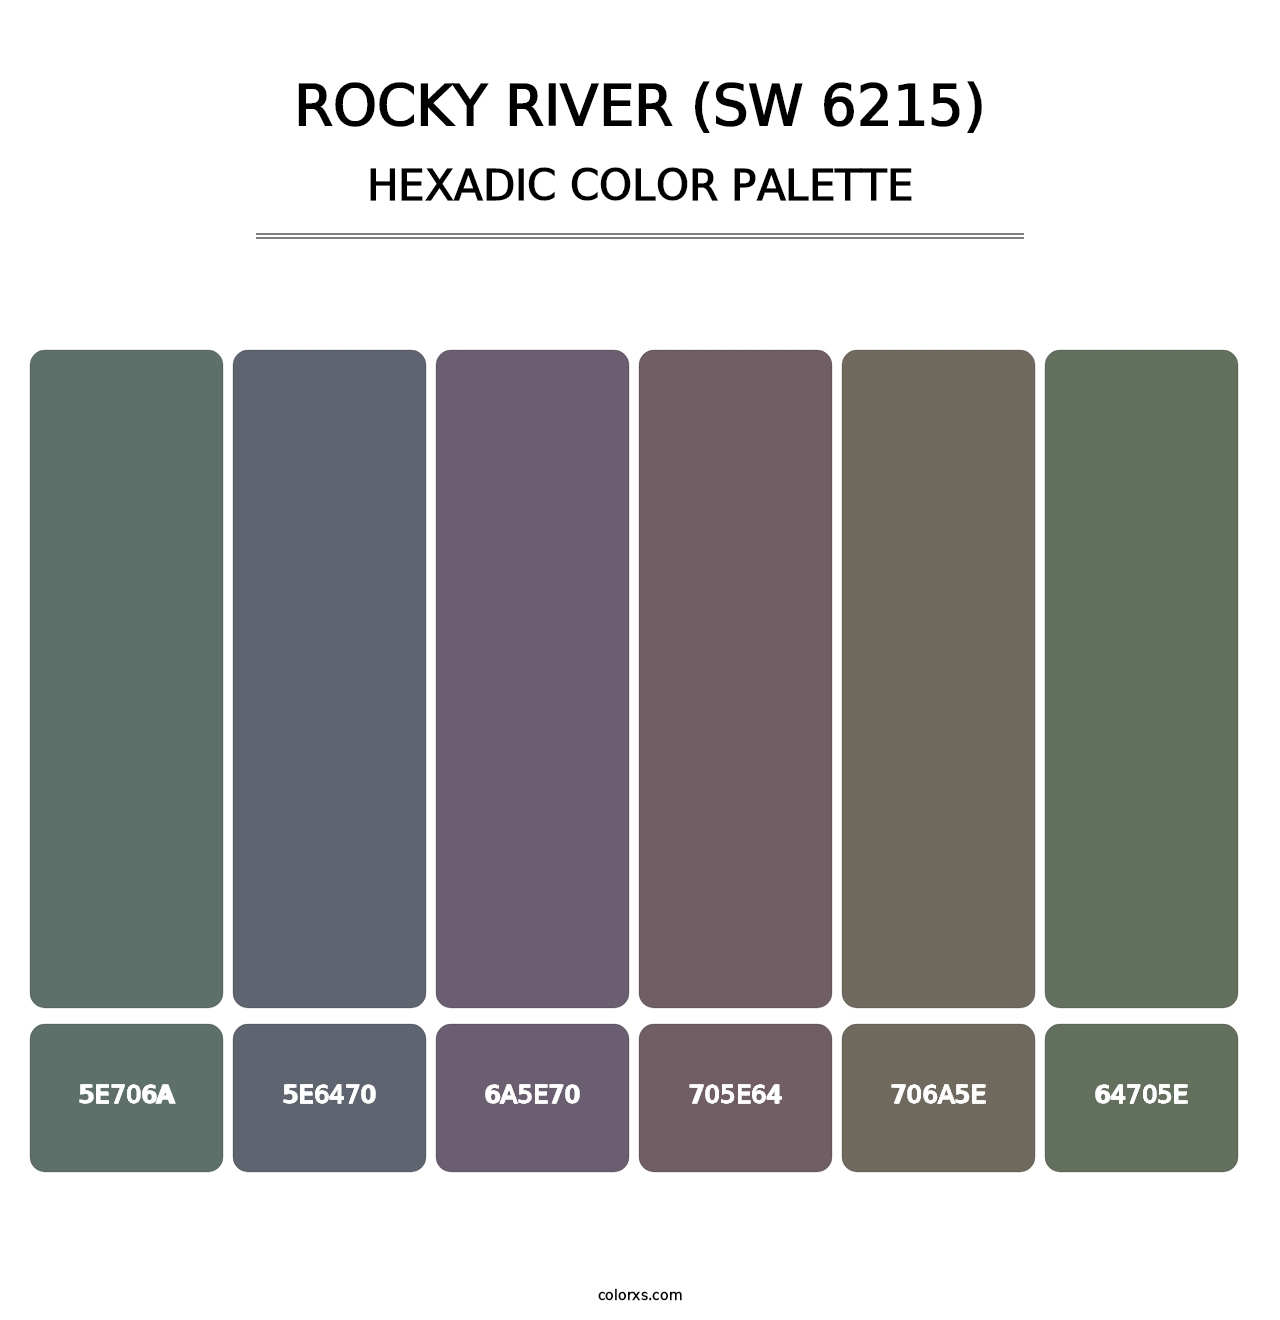 Rocky River (SW 6215) - Hexadic Color Palette